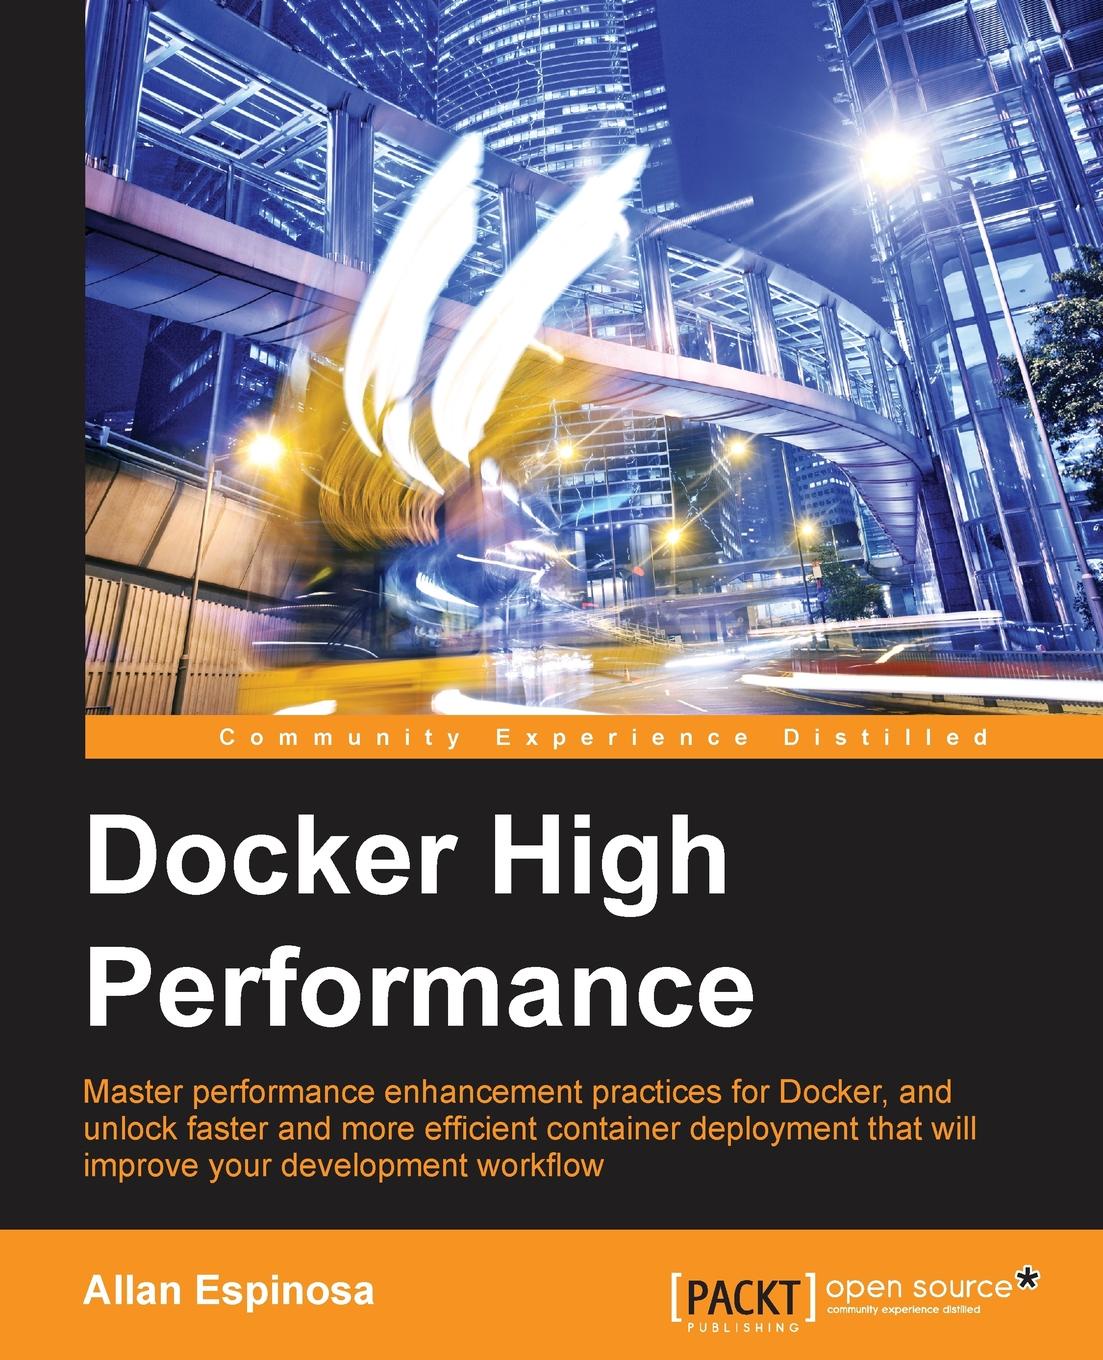 Performance master. Docker книга. High Performance Озон. Книги по docker на русском. Докер книга Издательство php.